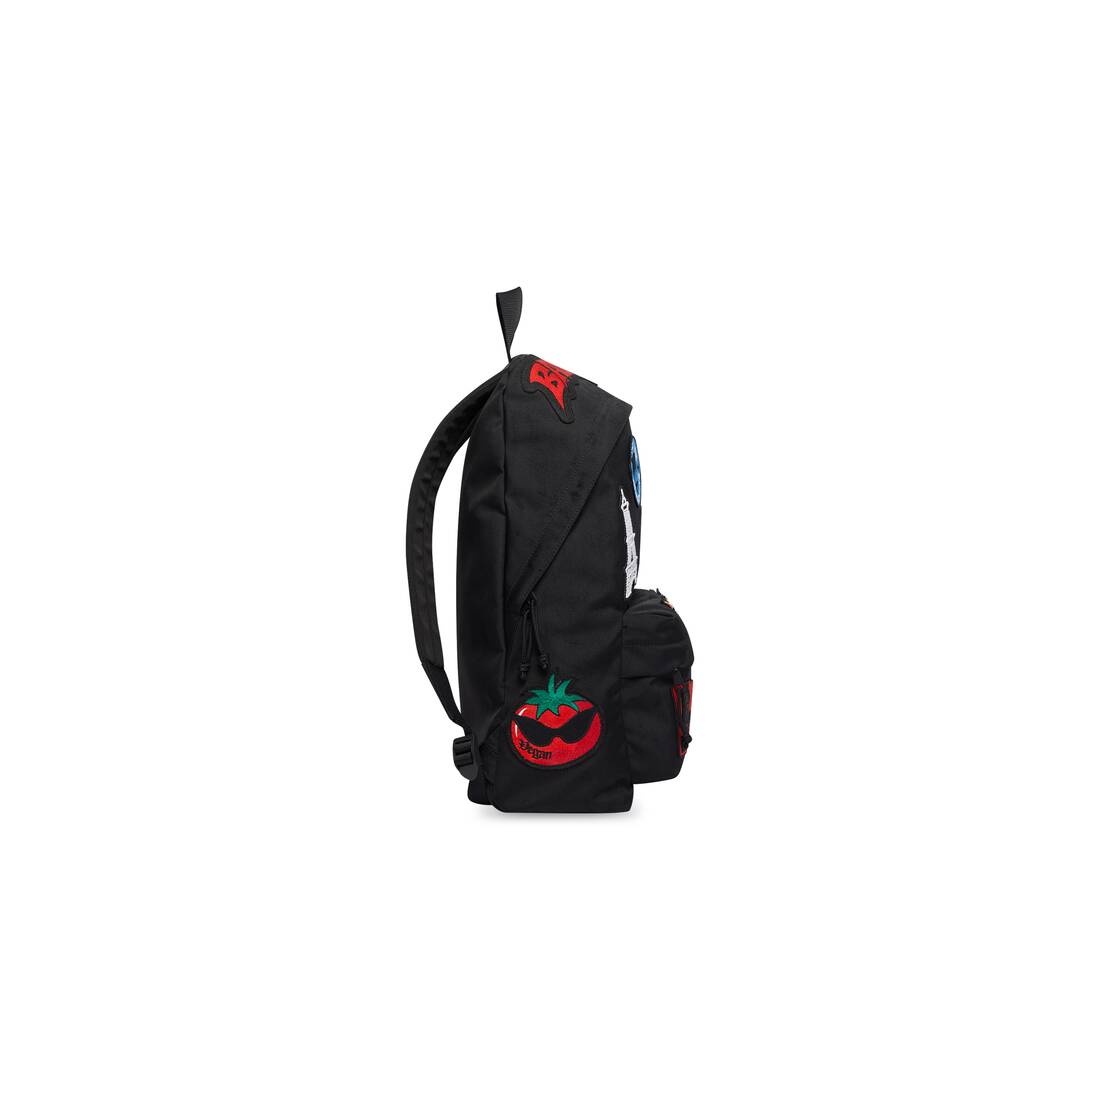 Men's Explorer Backpack in Black - 2